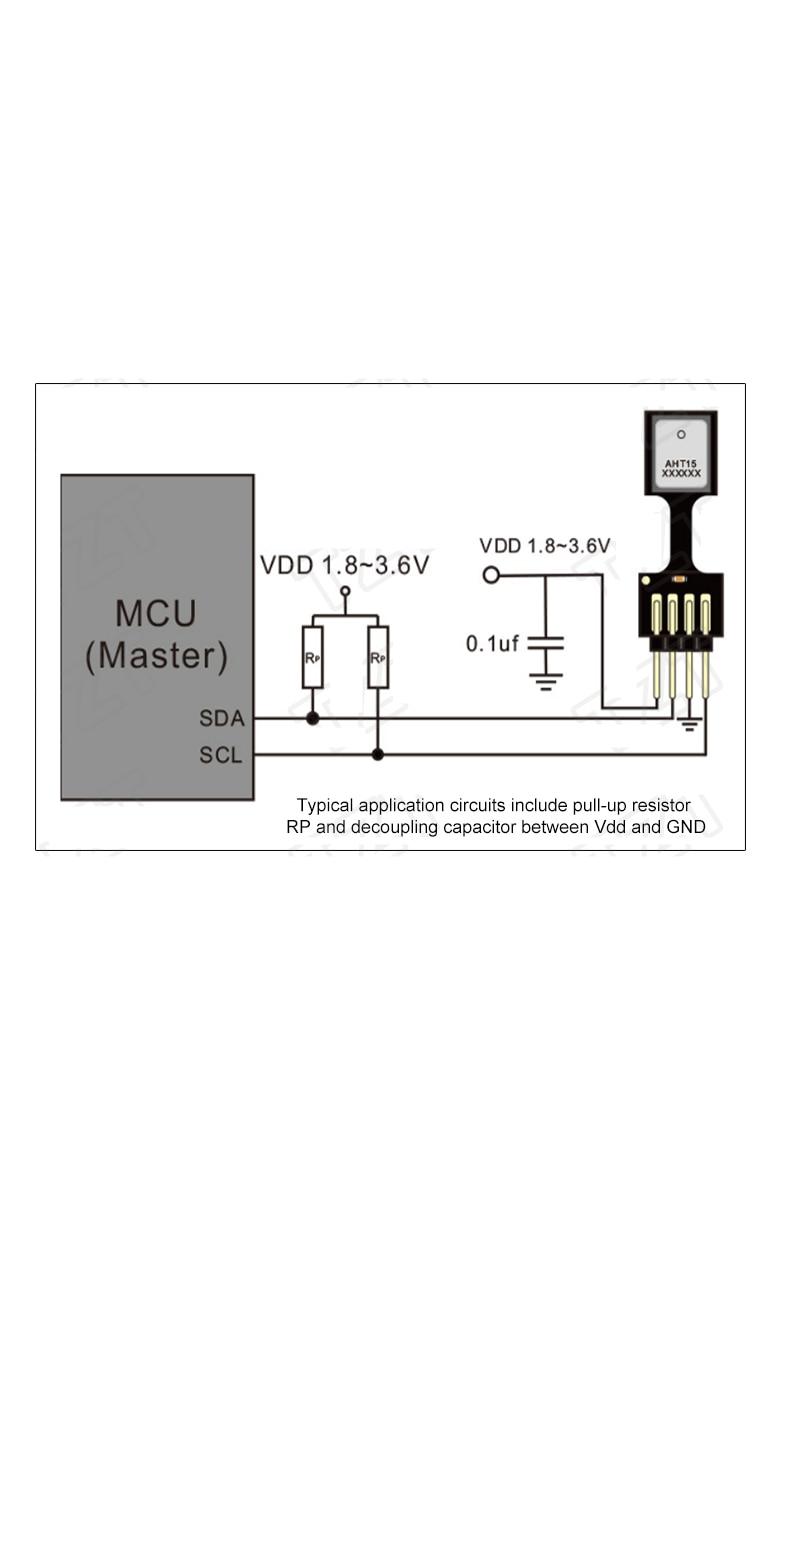 AHT15 integrated temperature and humidity sensor Humidity accuracy ±2%RH (25℃) Temperature accuracy ±0.3 For Arduino